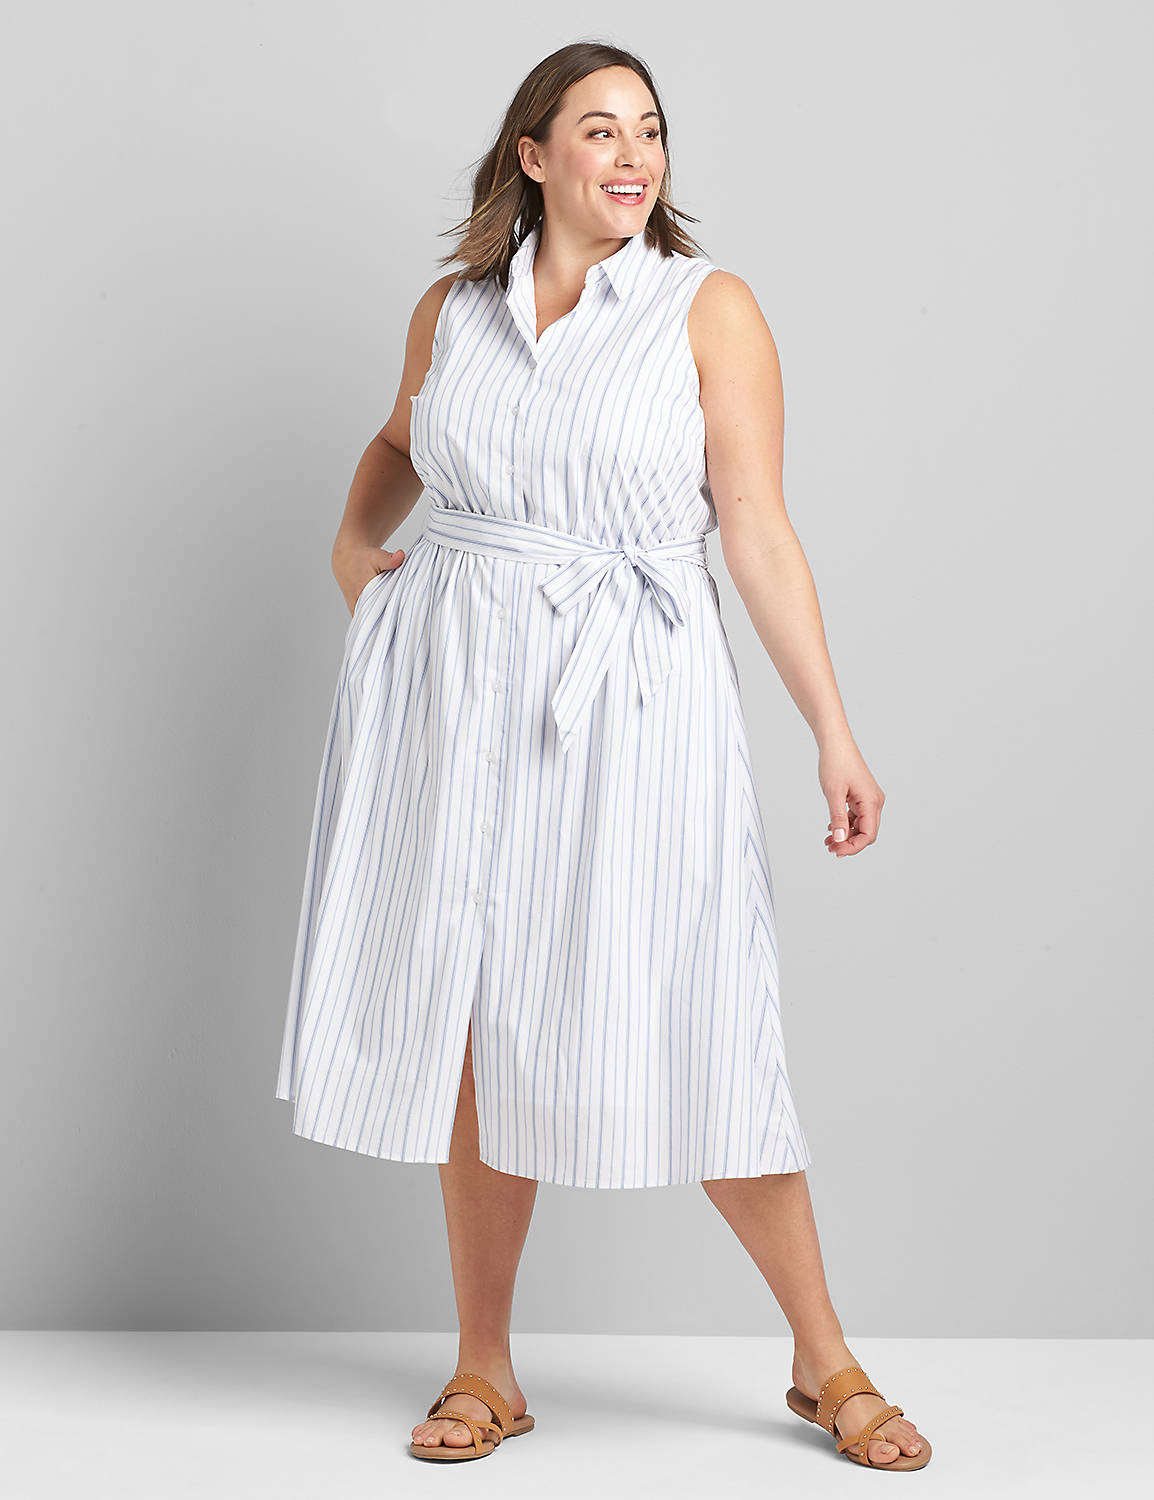 Sleeveless Striped Midi Shirtdress 1120380:Blue/White Stripe As Header:16 Product Image 1